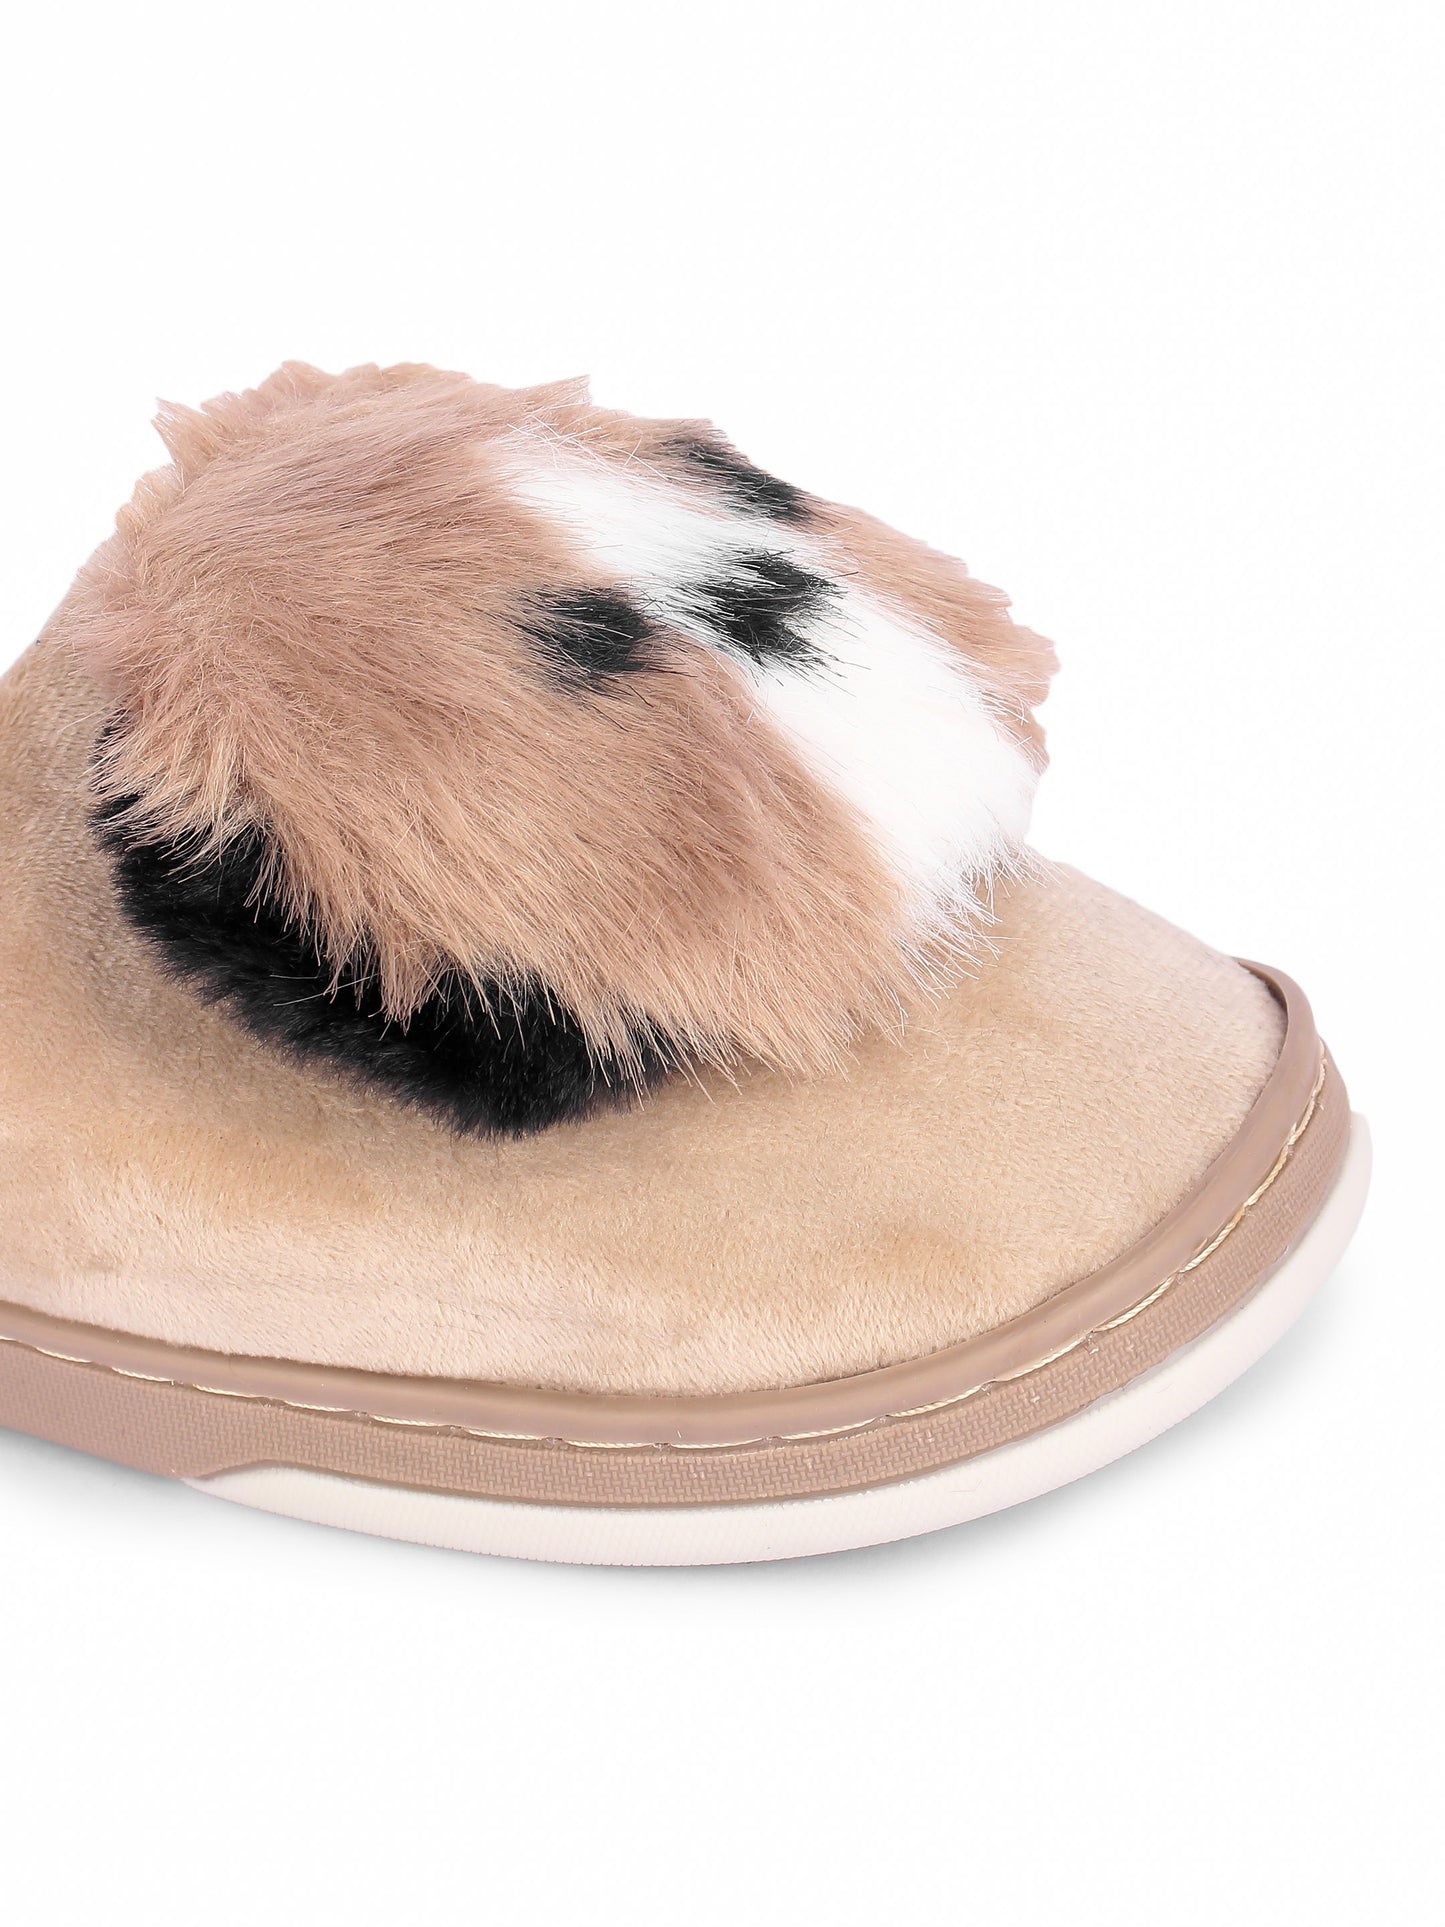 Brauch Women's Tan Dog Fur Winter Slippers